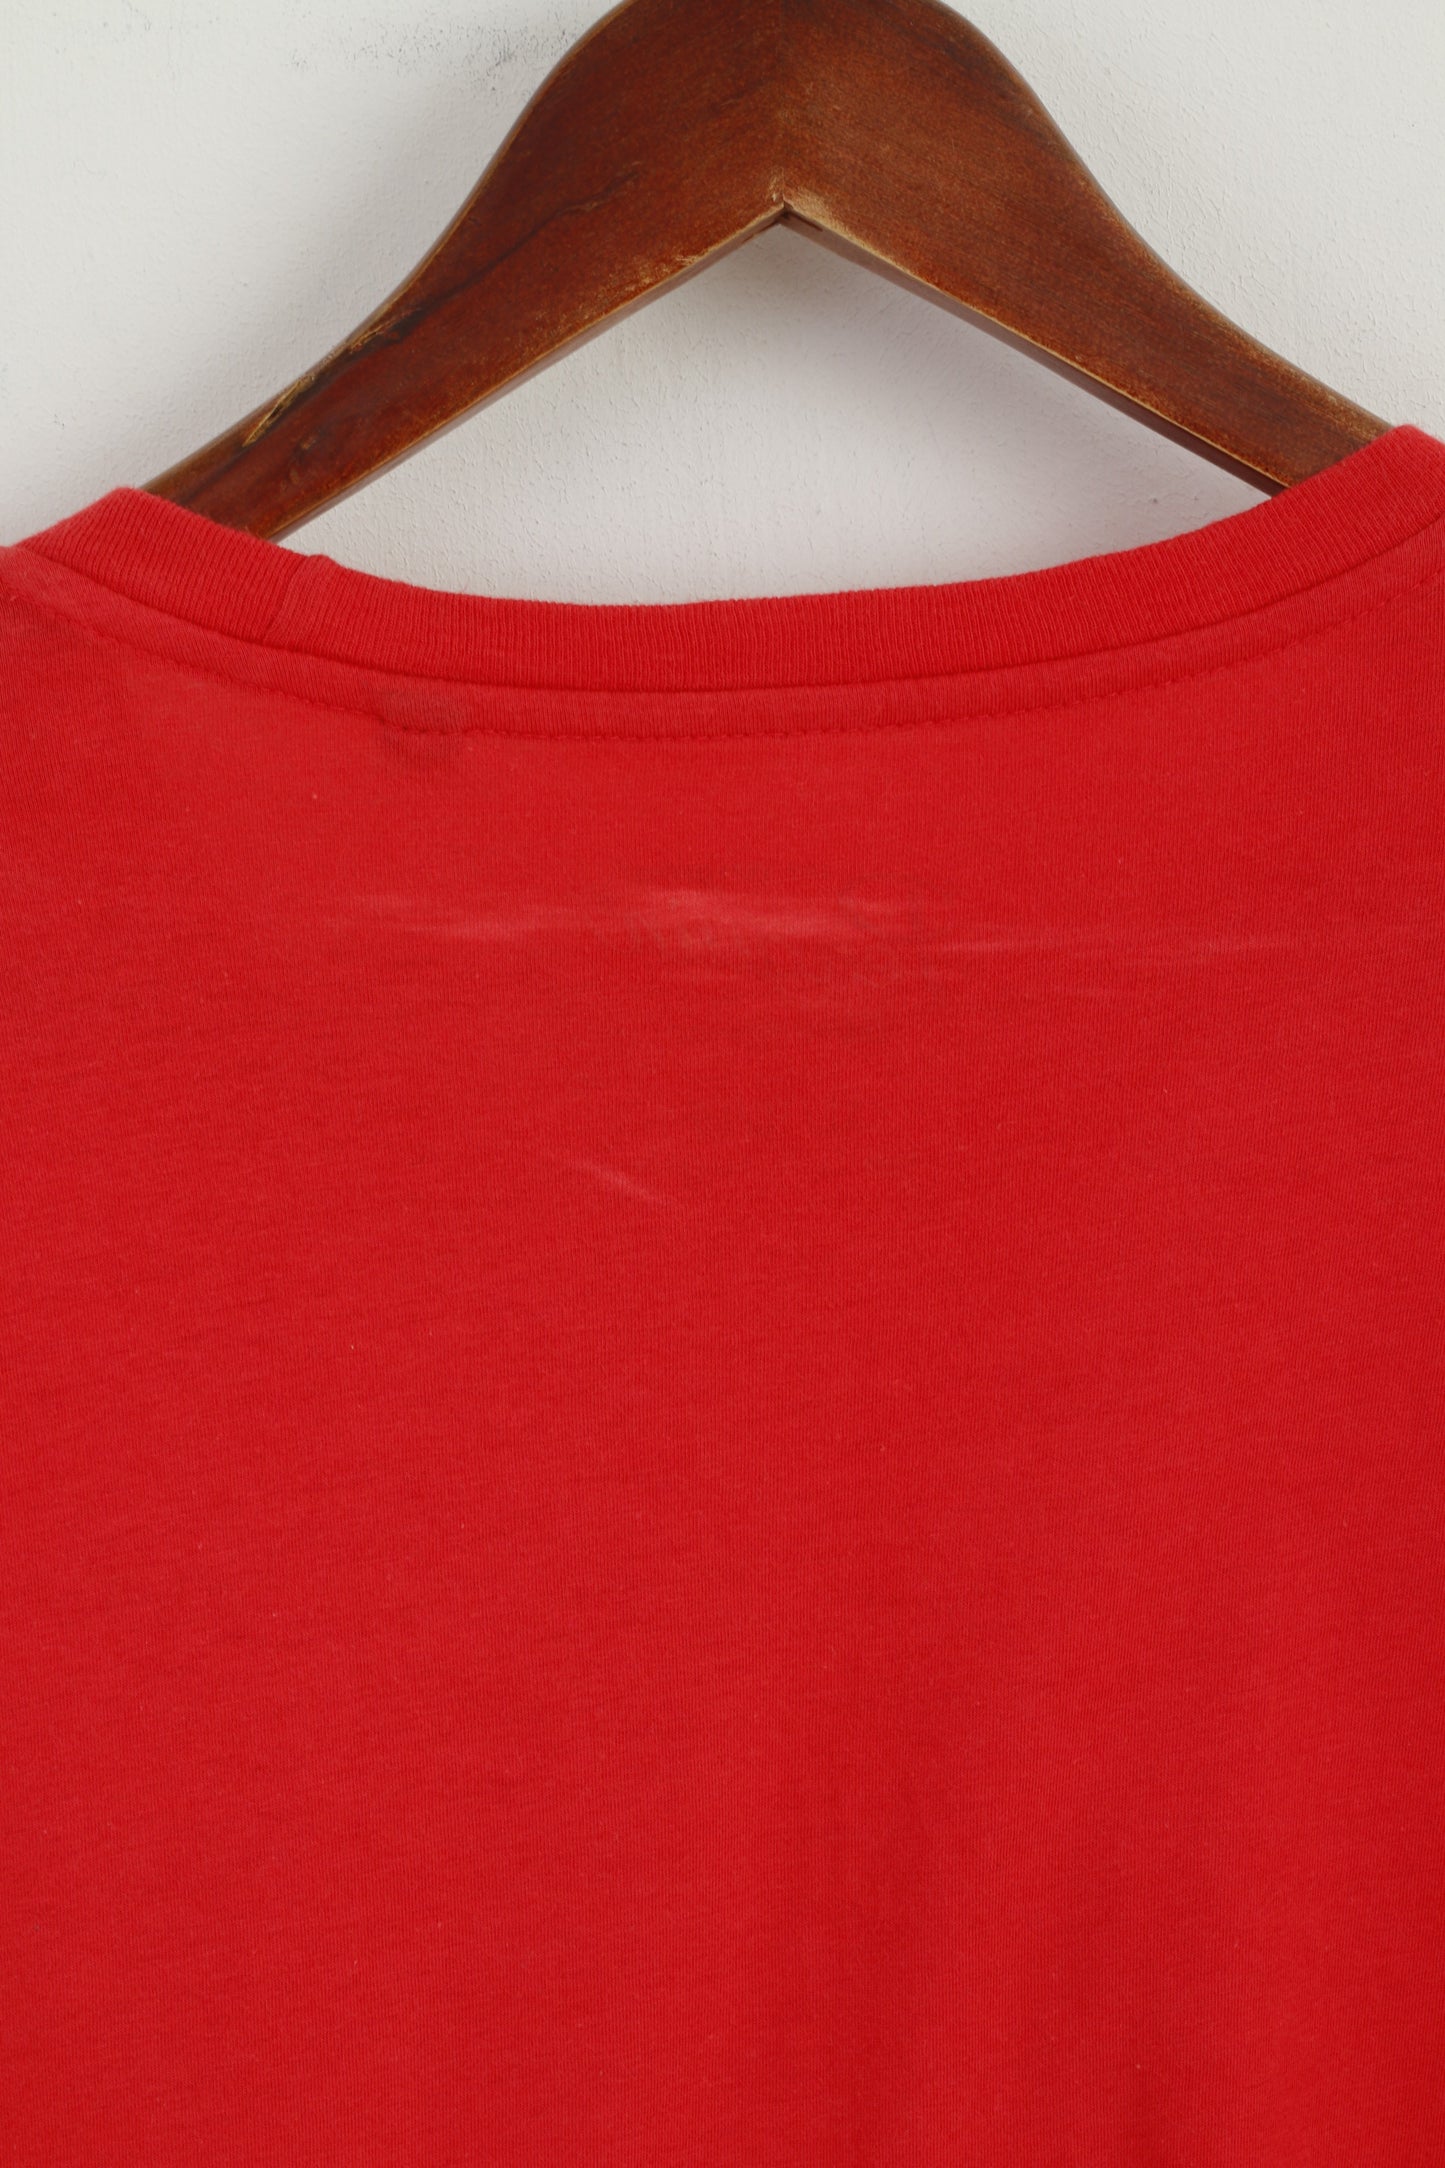 Penguin by Munsingwear Men XL T- Shirt Red Graphic Crew Neck Stretch Cotton Top